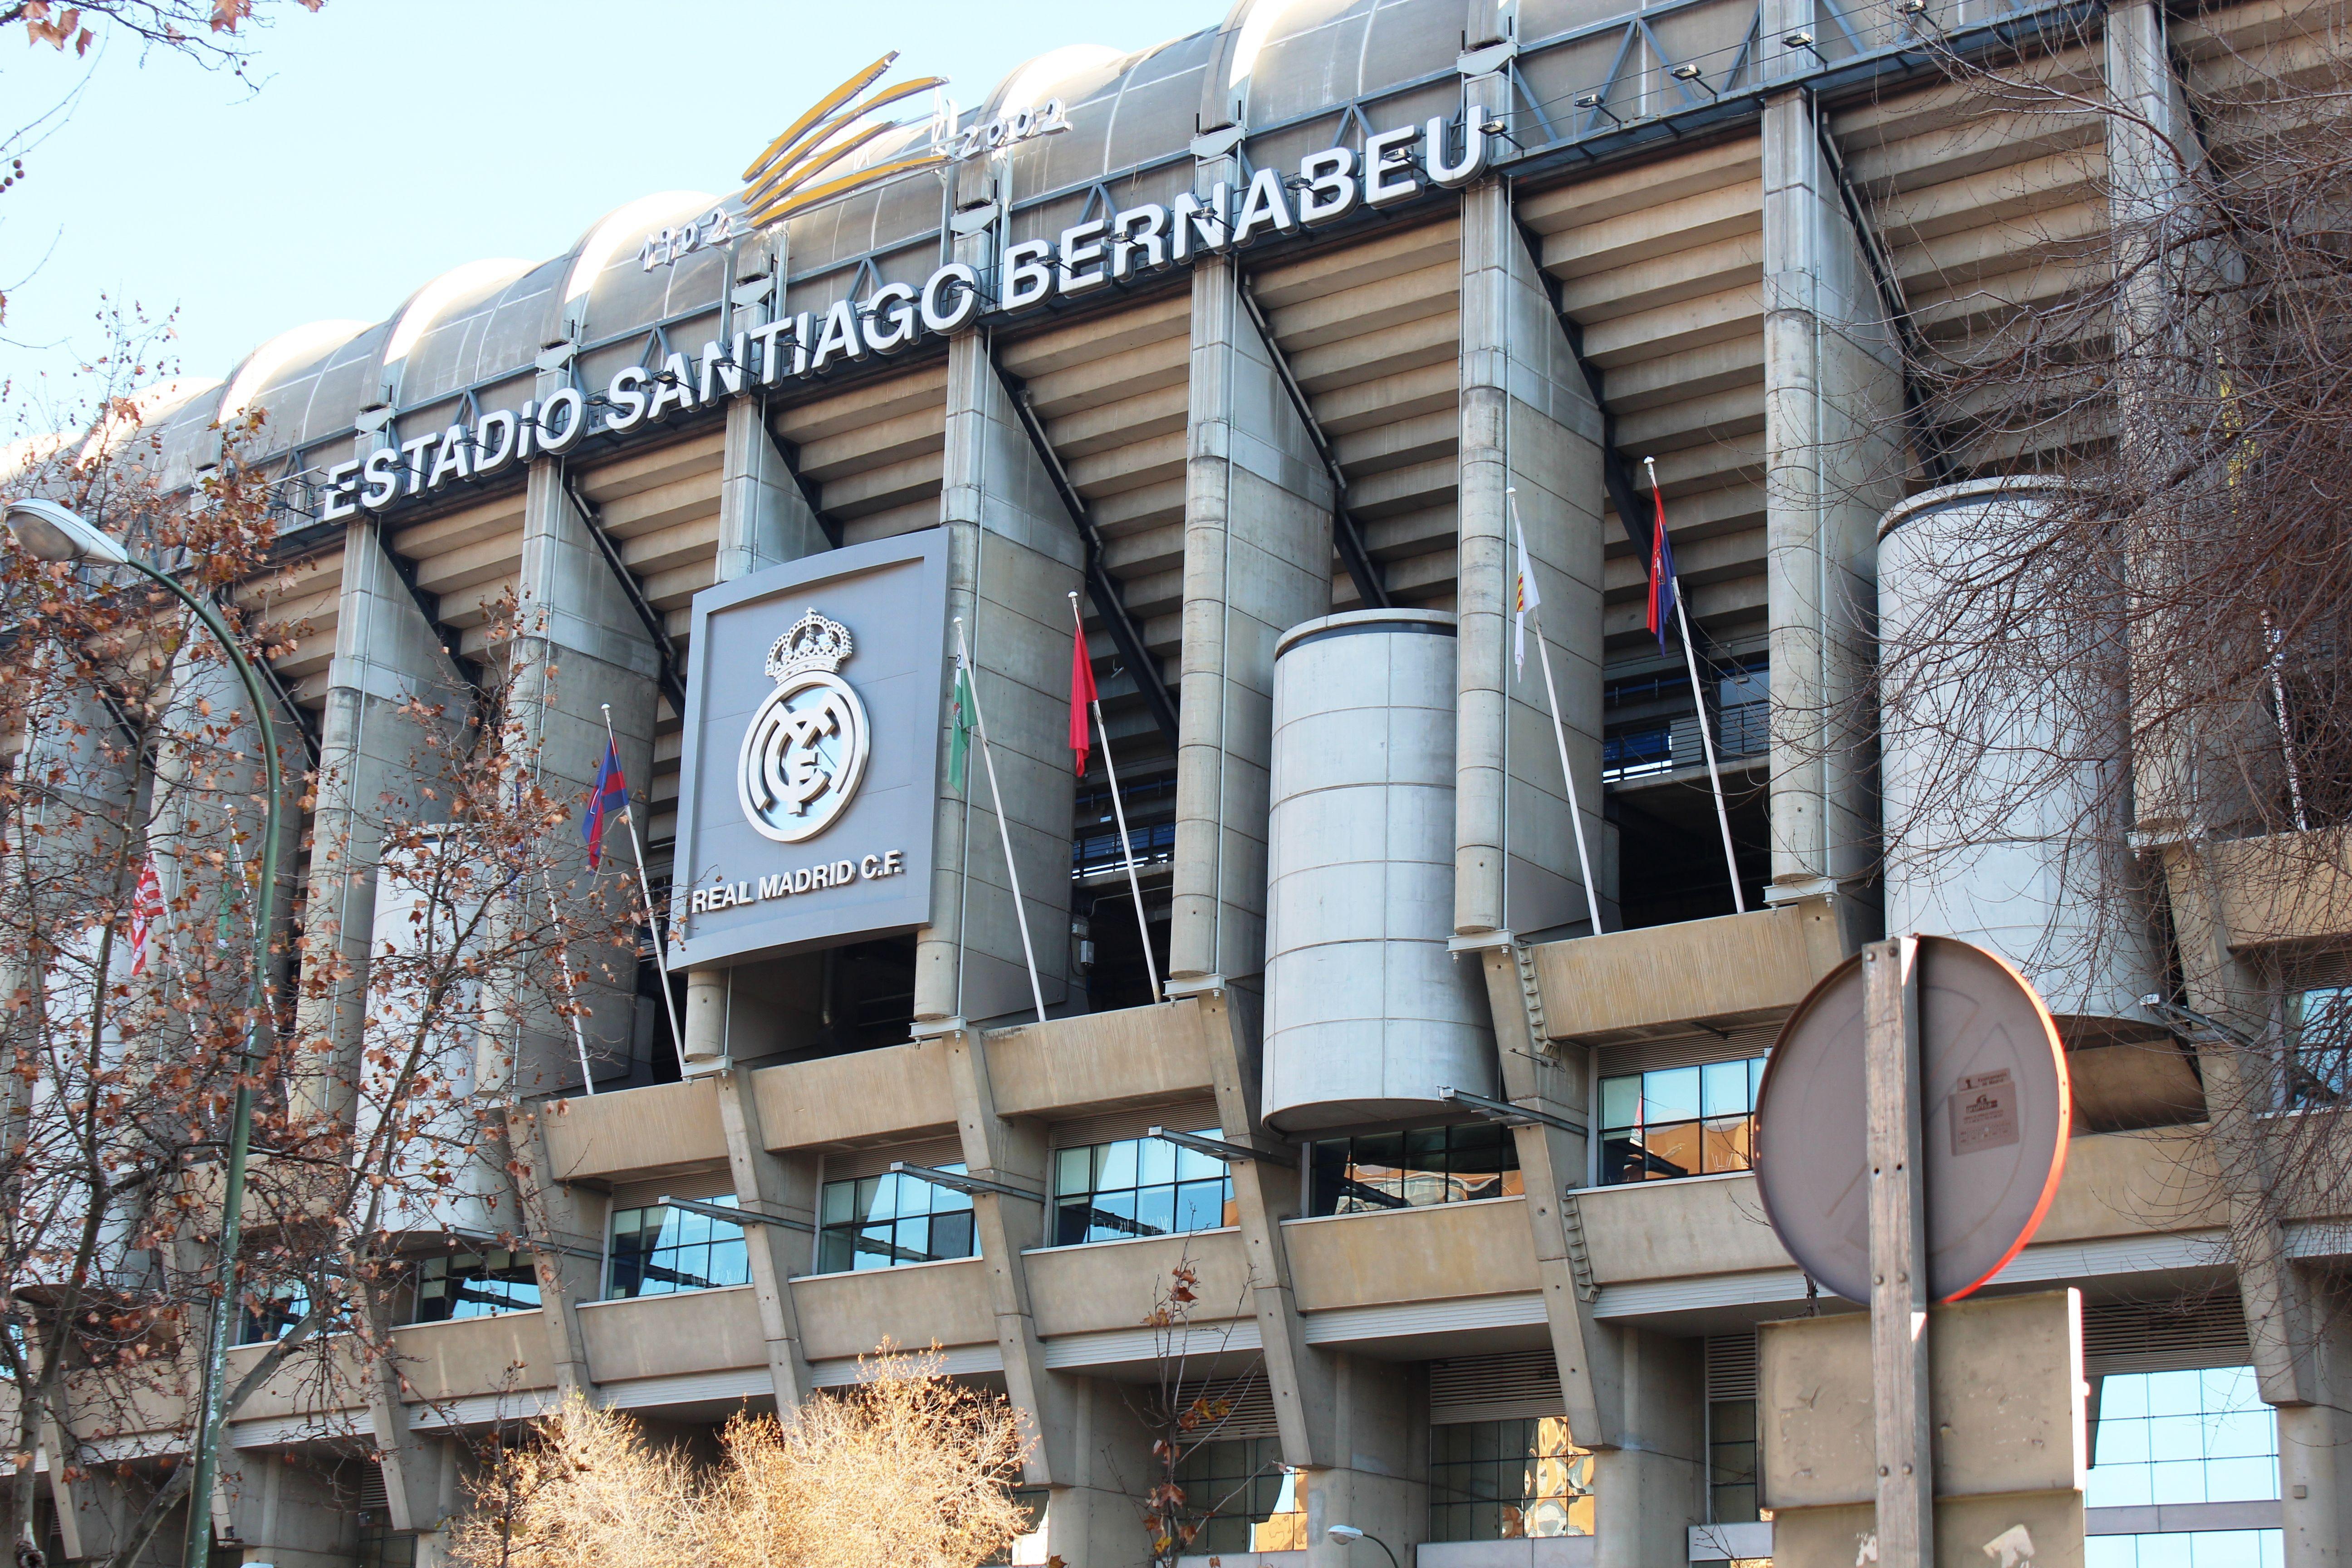 Real Madrid Santiago Bernabeu stadium wallpaper